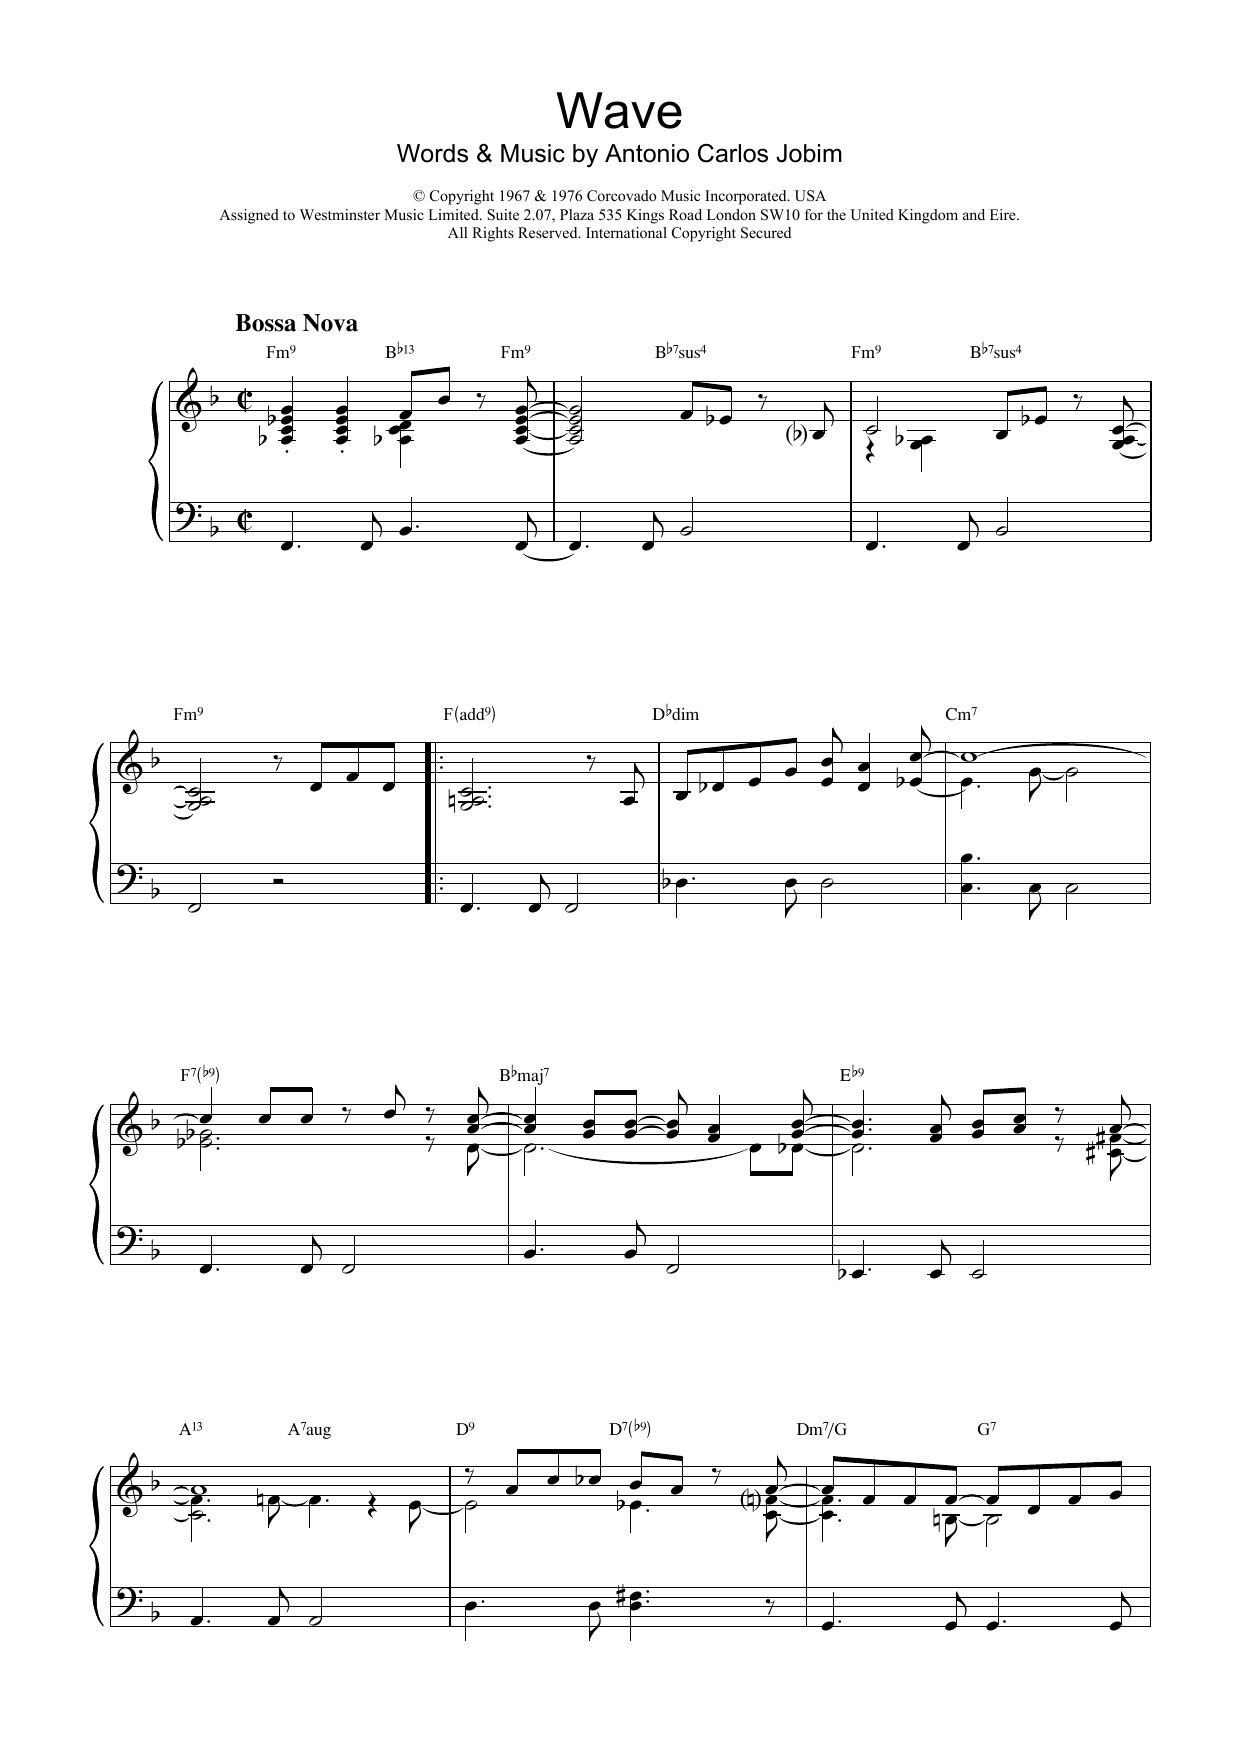 Antonio Carlos Jobim Wave Sheet Music Notes & Chords for Piano - Download or Print PDF